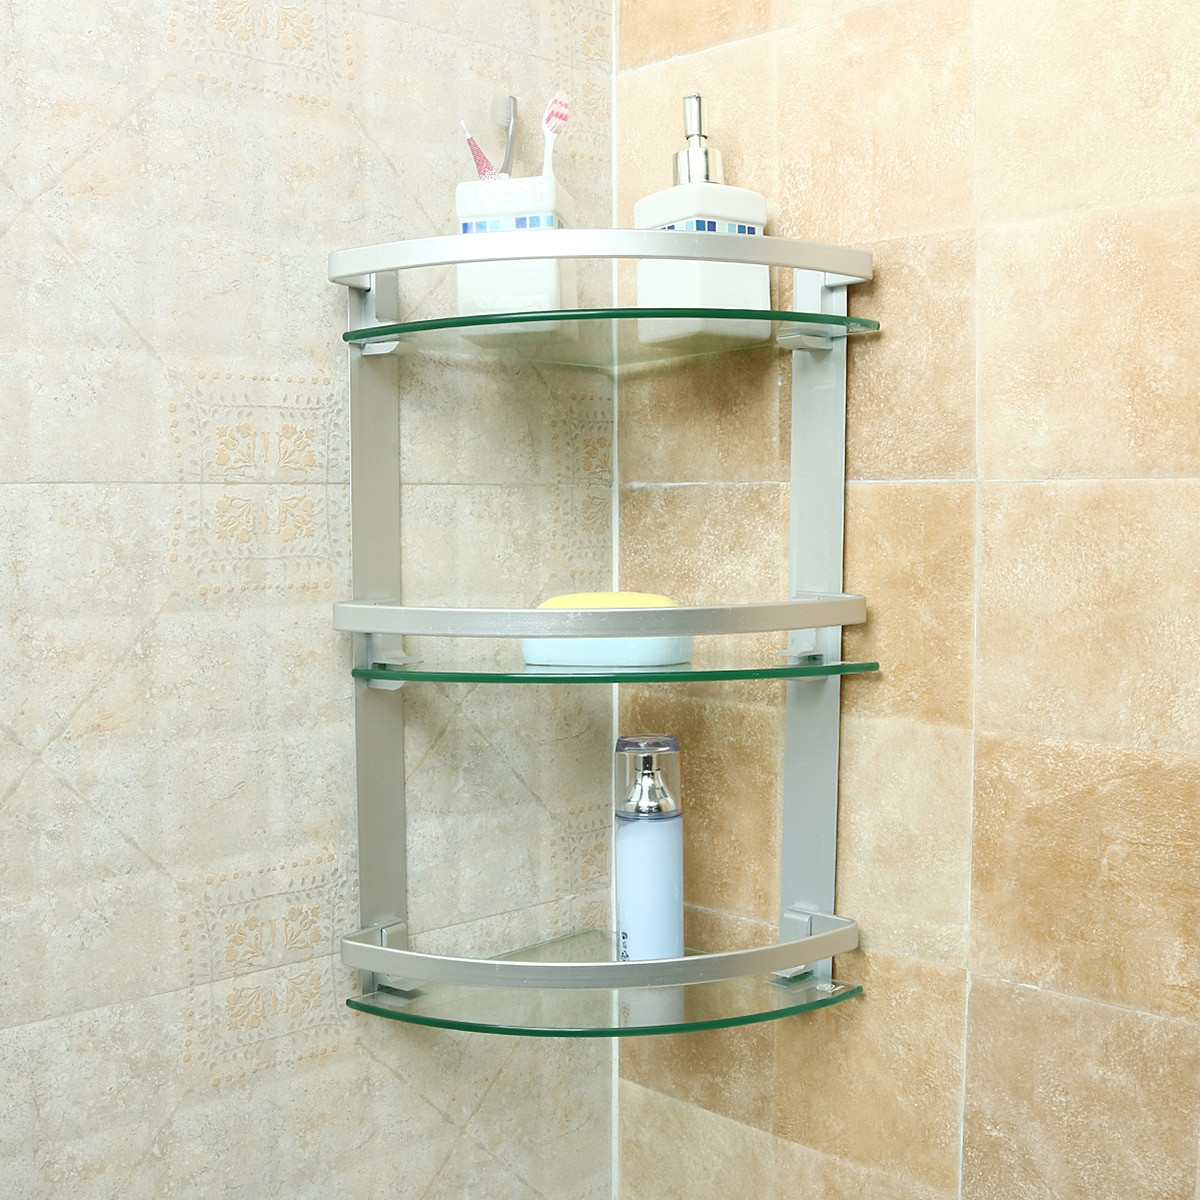 Bathroom Shower Corner Shelves
 3 Tier Glass Bathroom Shower Caddy Corner Shelf Organizer